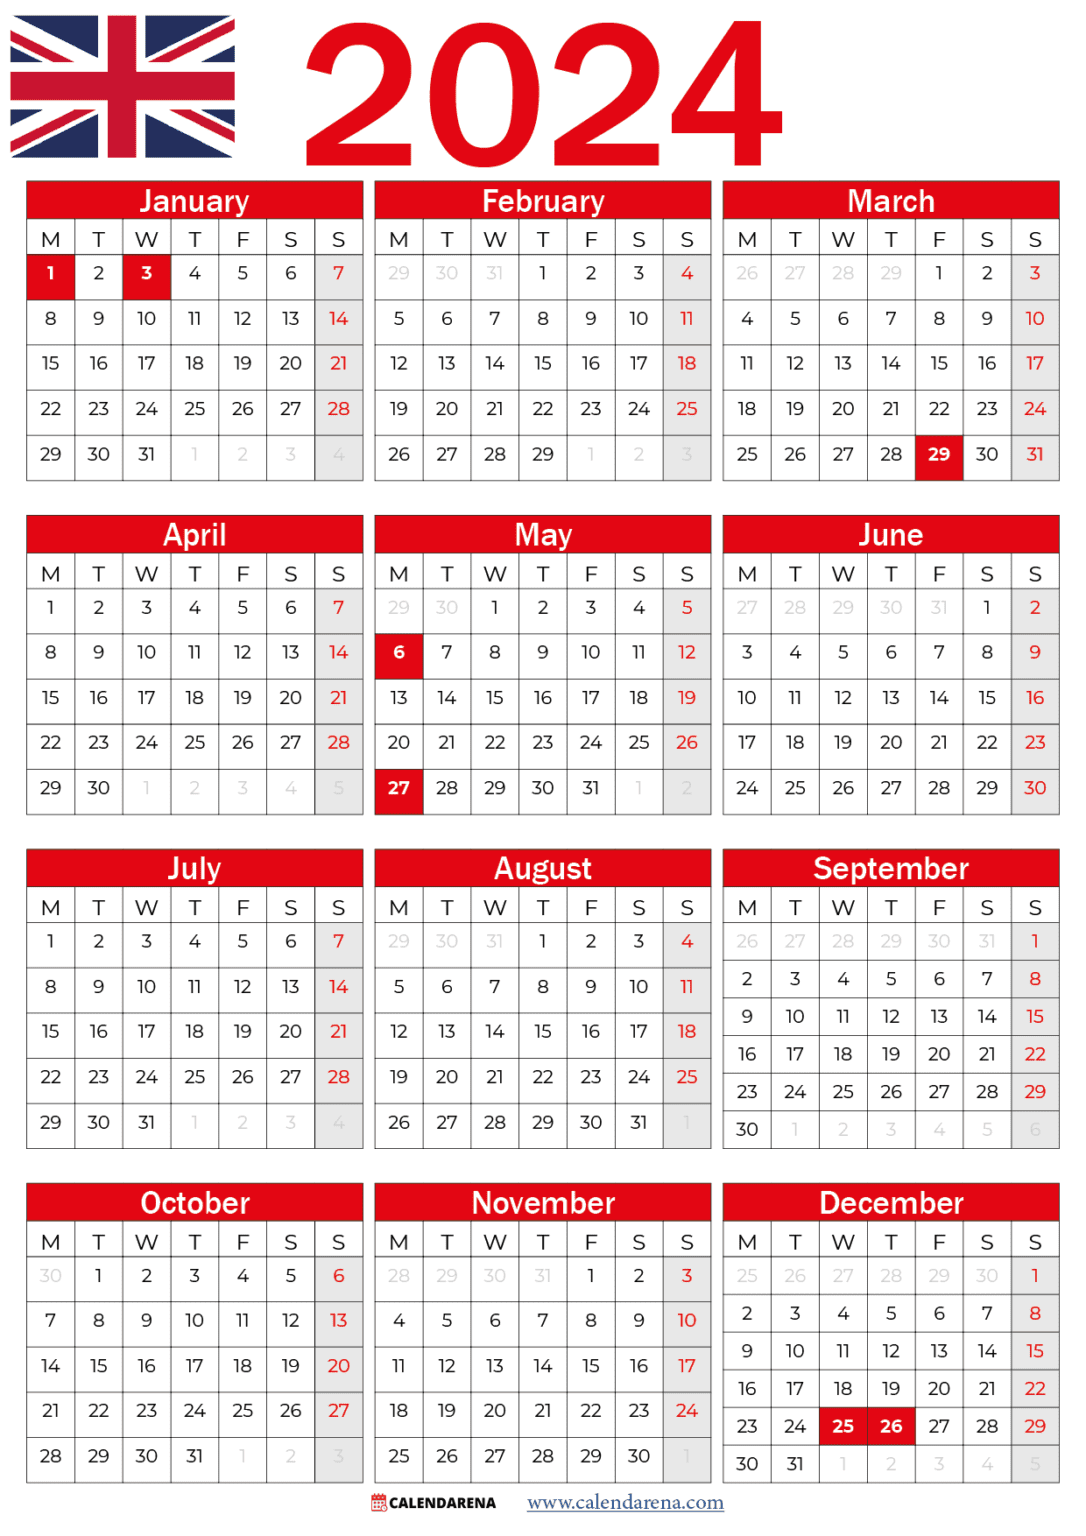 2024 Calendar Uk With Bank Holidays Printable Jan 2024 Calendar - Free Printable 2024 Monthly Calendar With UK Holidays